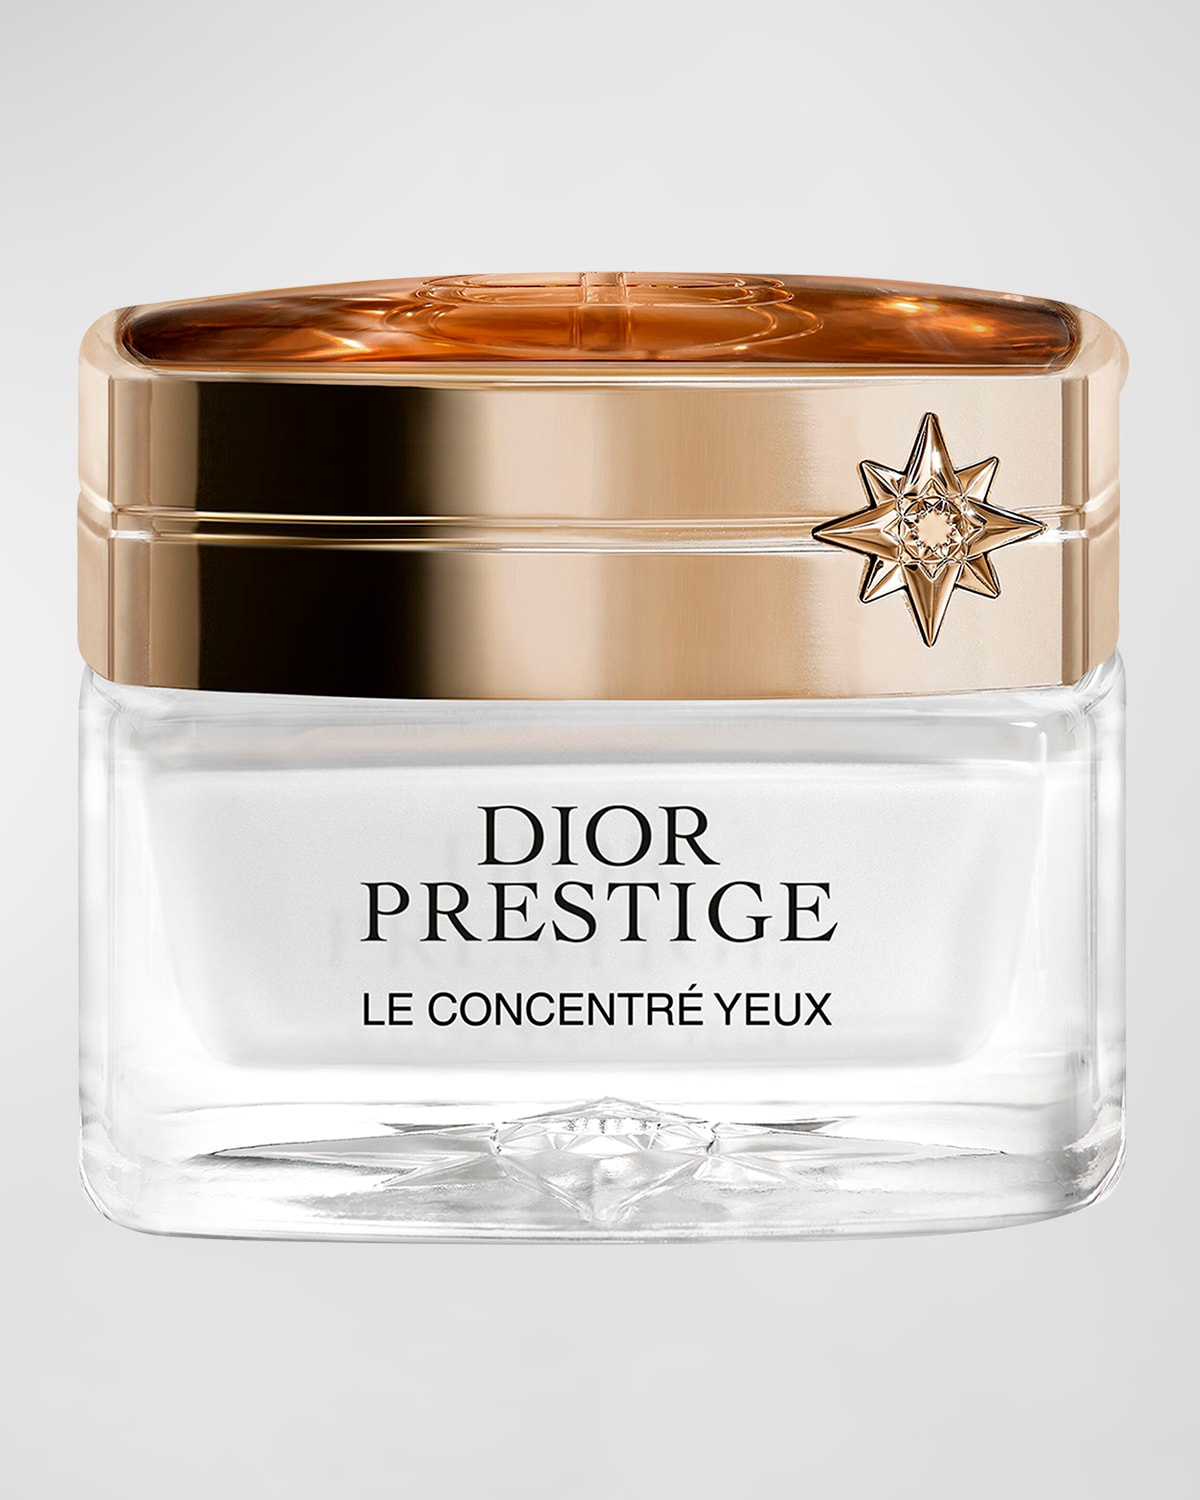 Dior Prestige Le Concentre Yeux Anti-aging Eye Cream, 0.5 Oz.